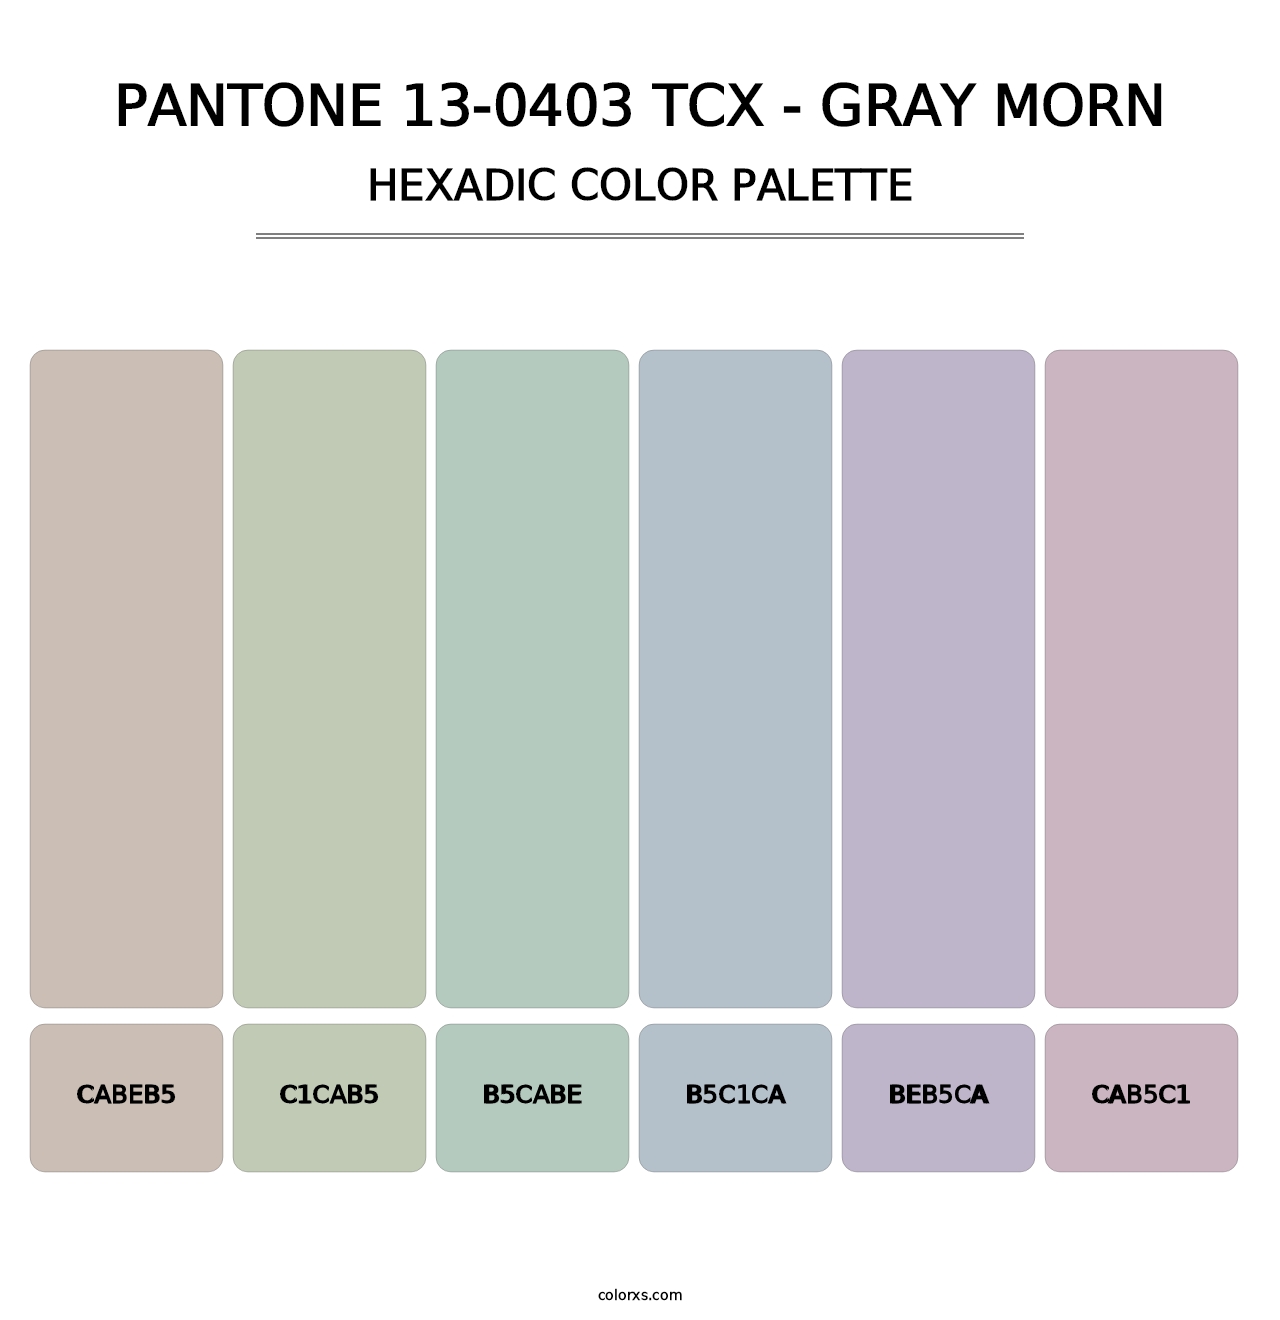 PANTONE 13-0403 TCX - Gray Morn - Hexadic Color Palette